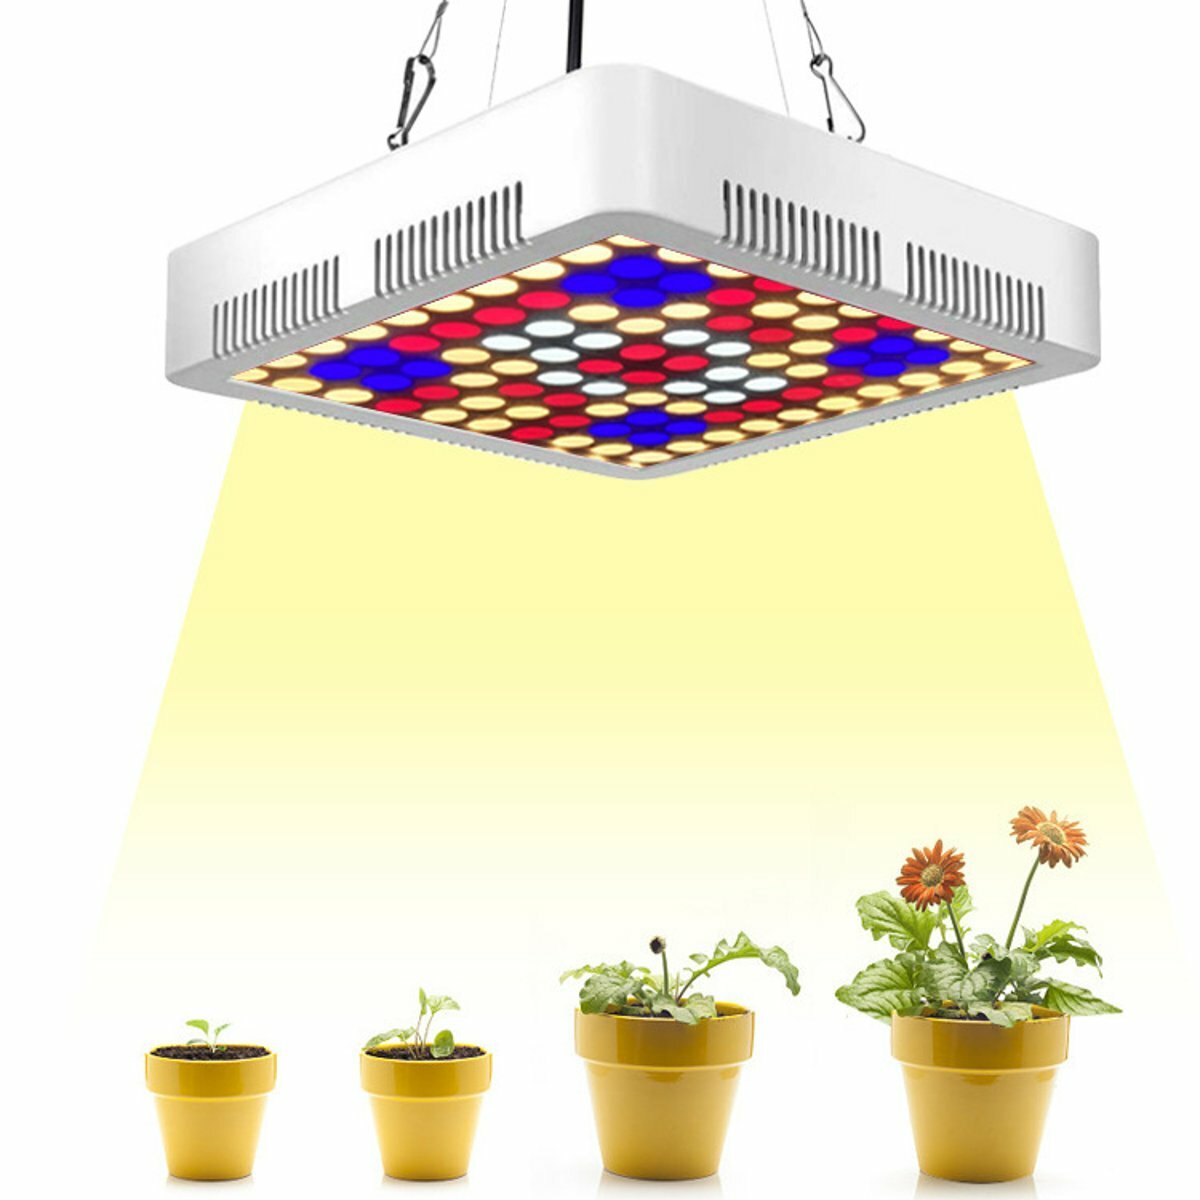 Image of 300W 100 LED Grow Light Full Spectrum Panel Indoor Plant Flower Lighting Lamps